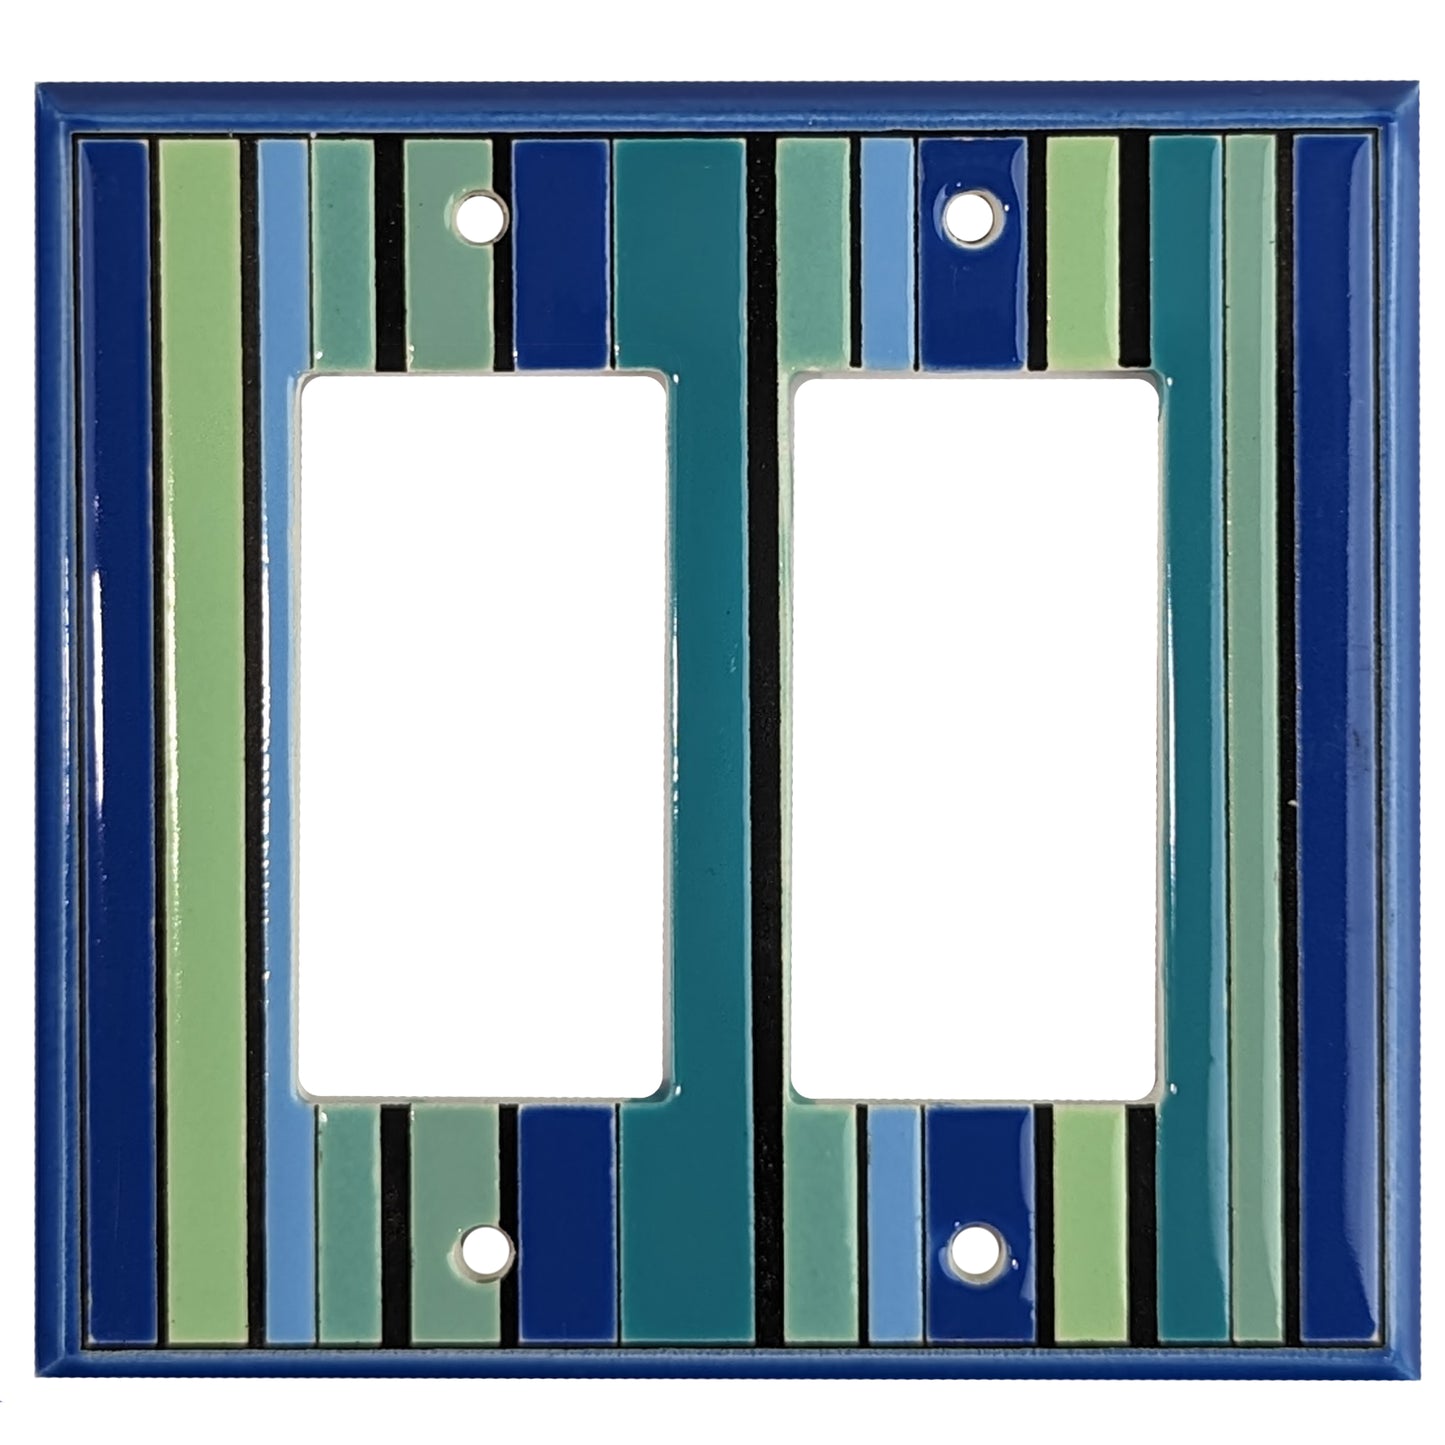 Blue Stripes Cover Plates 2 Rocker Wallplate